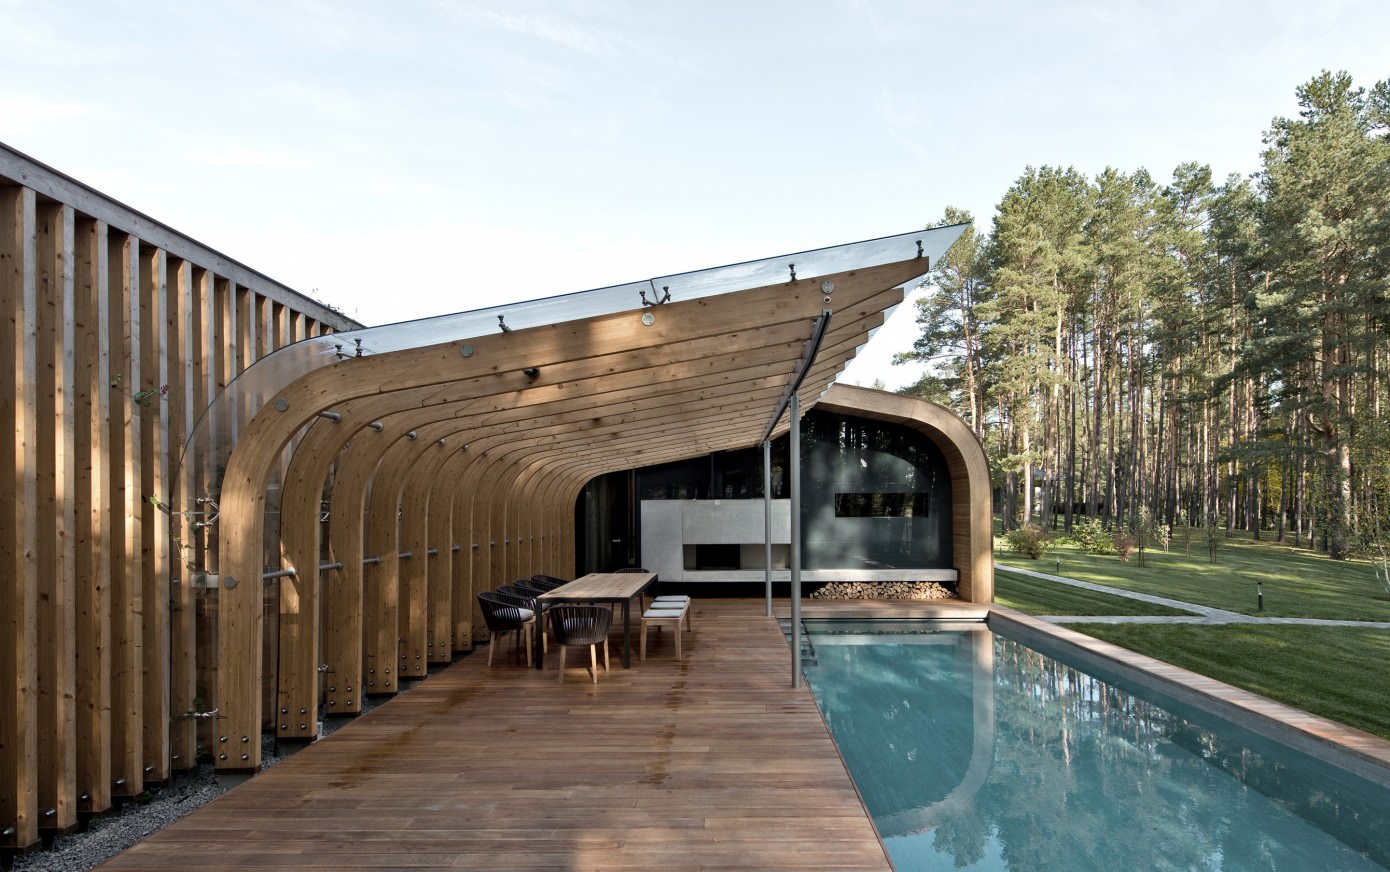 Villa G by Audrius Ambrasas Architects